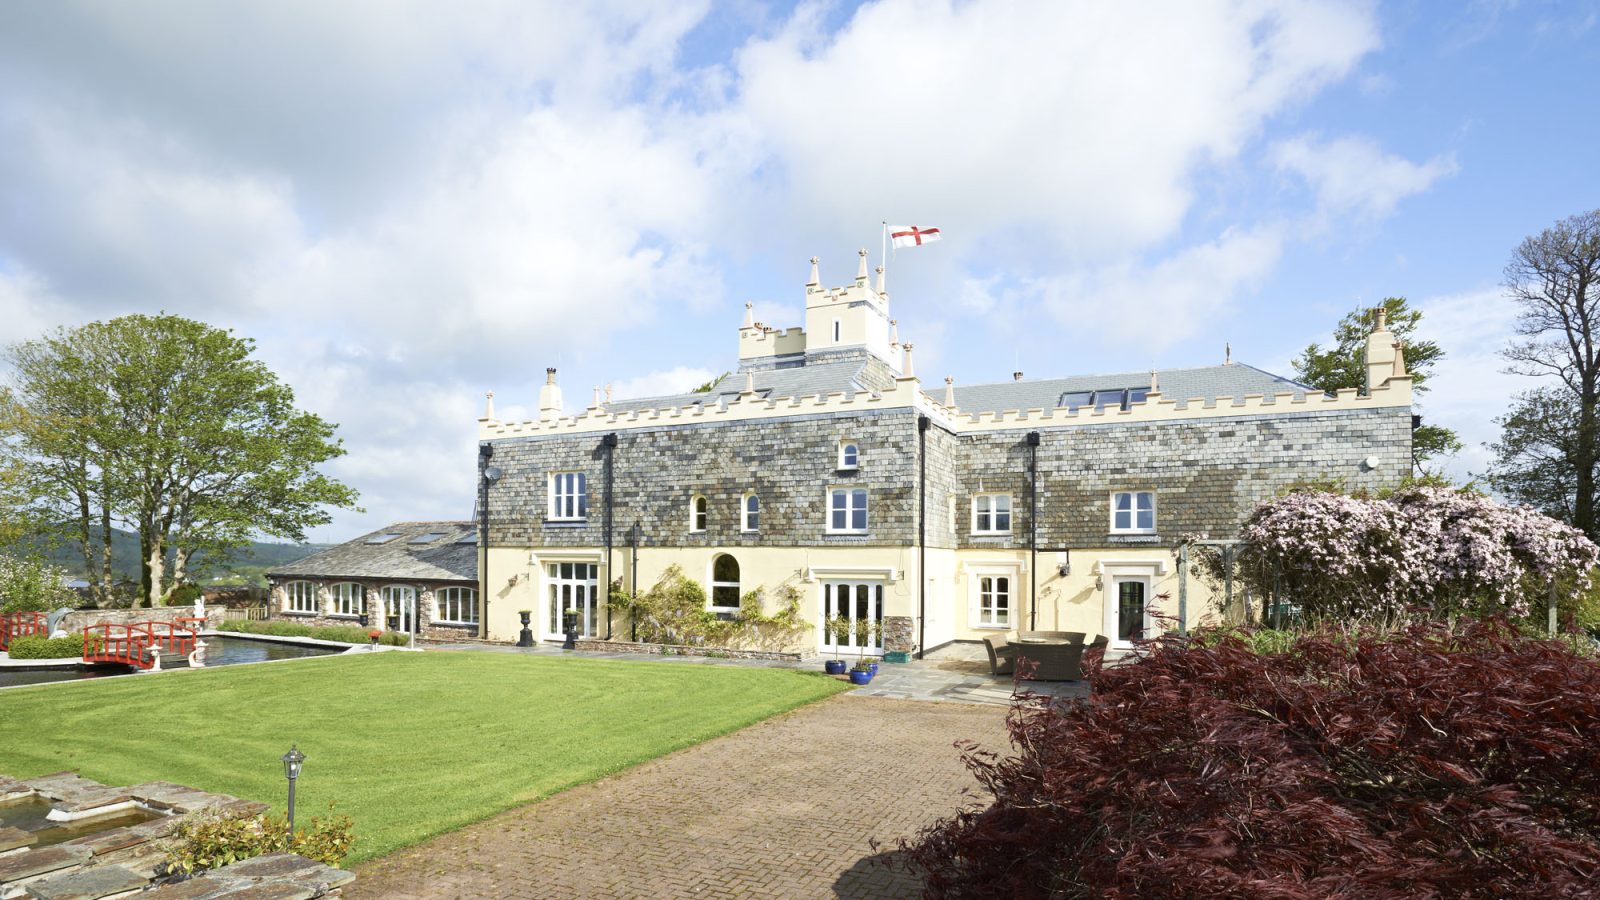  Ludbrook Manor - kate & tom's Large Holiday Homes